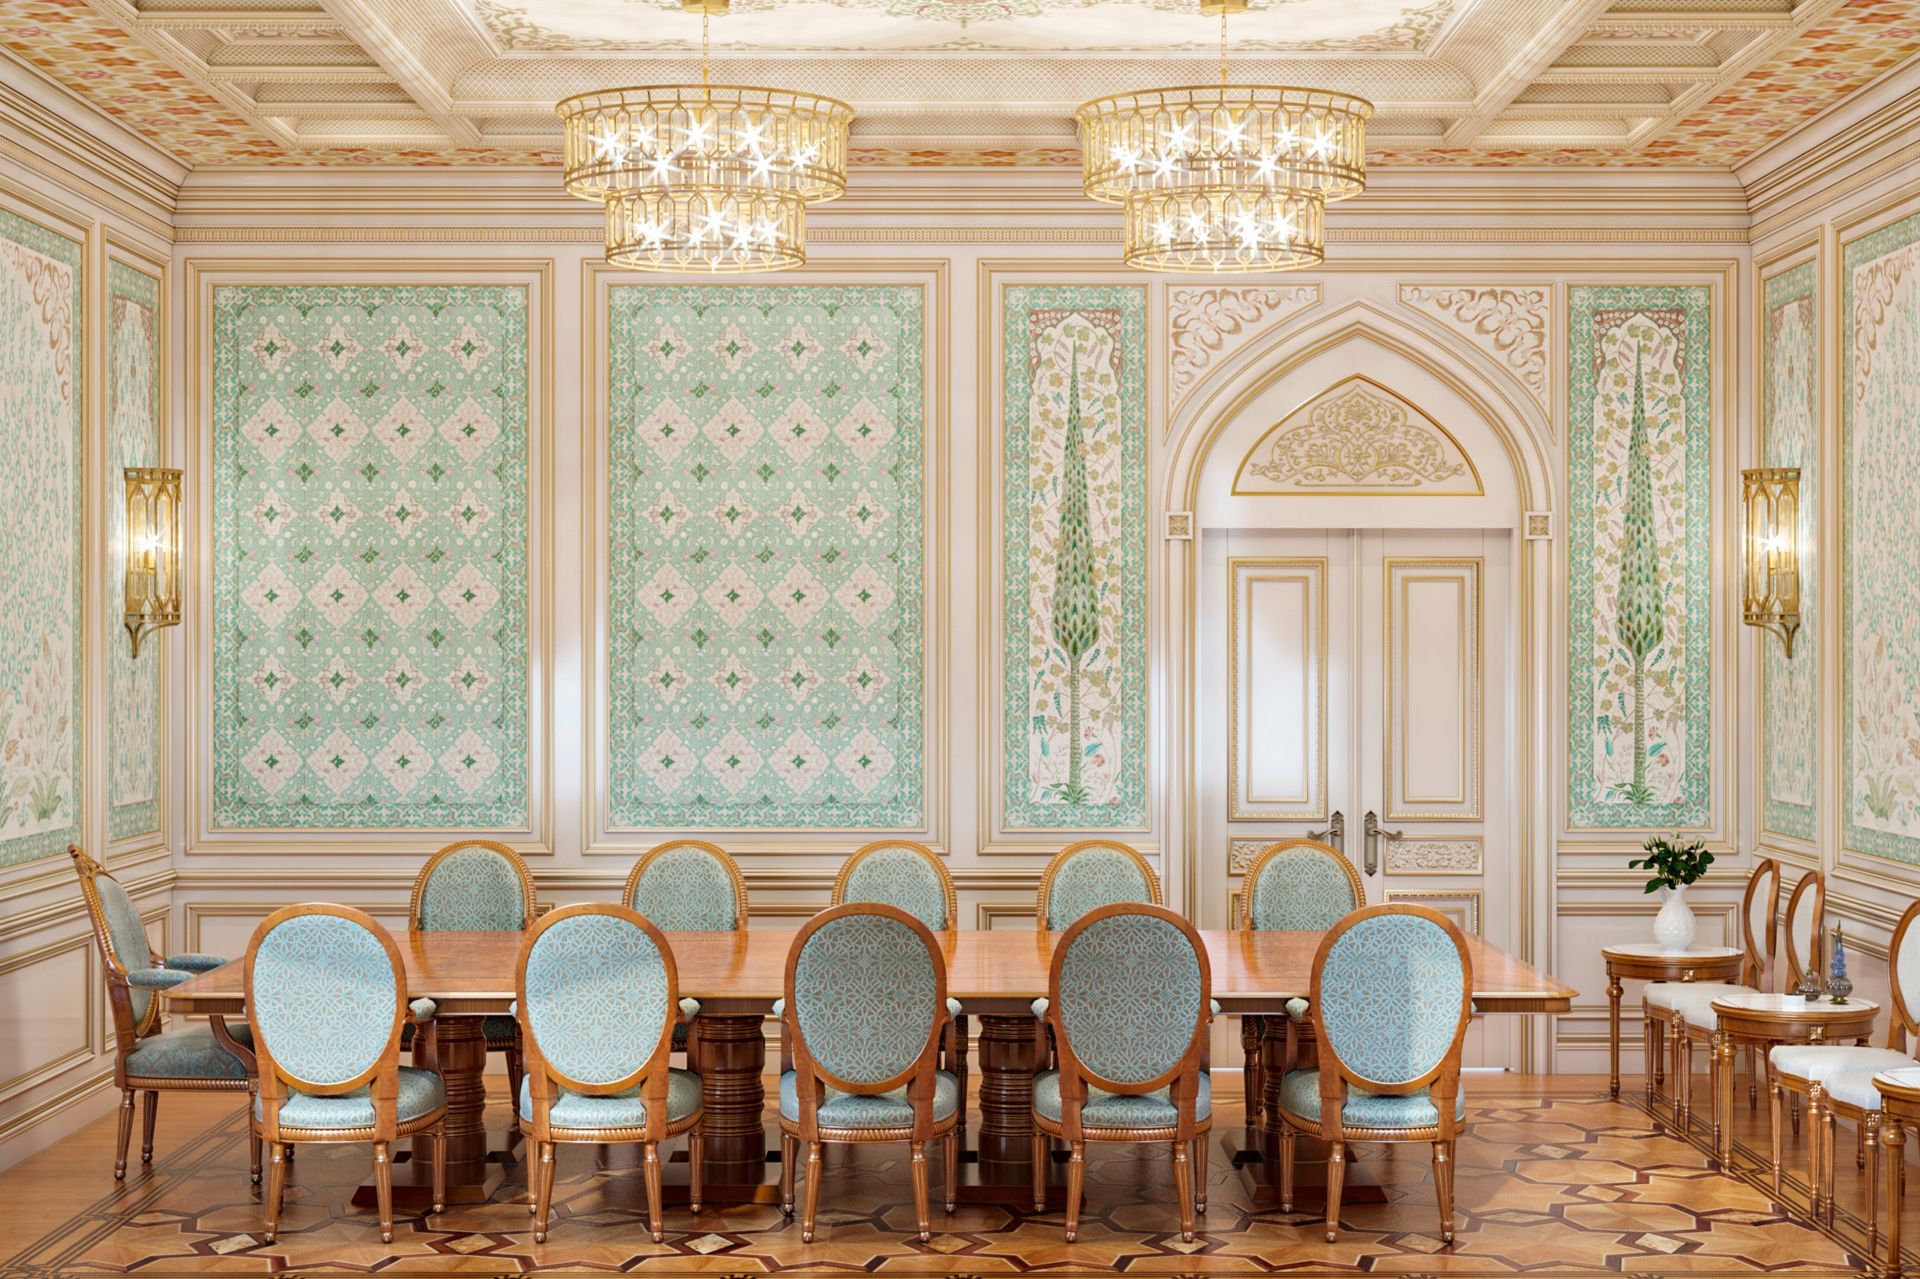 Meeting room interior design in oriental style